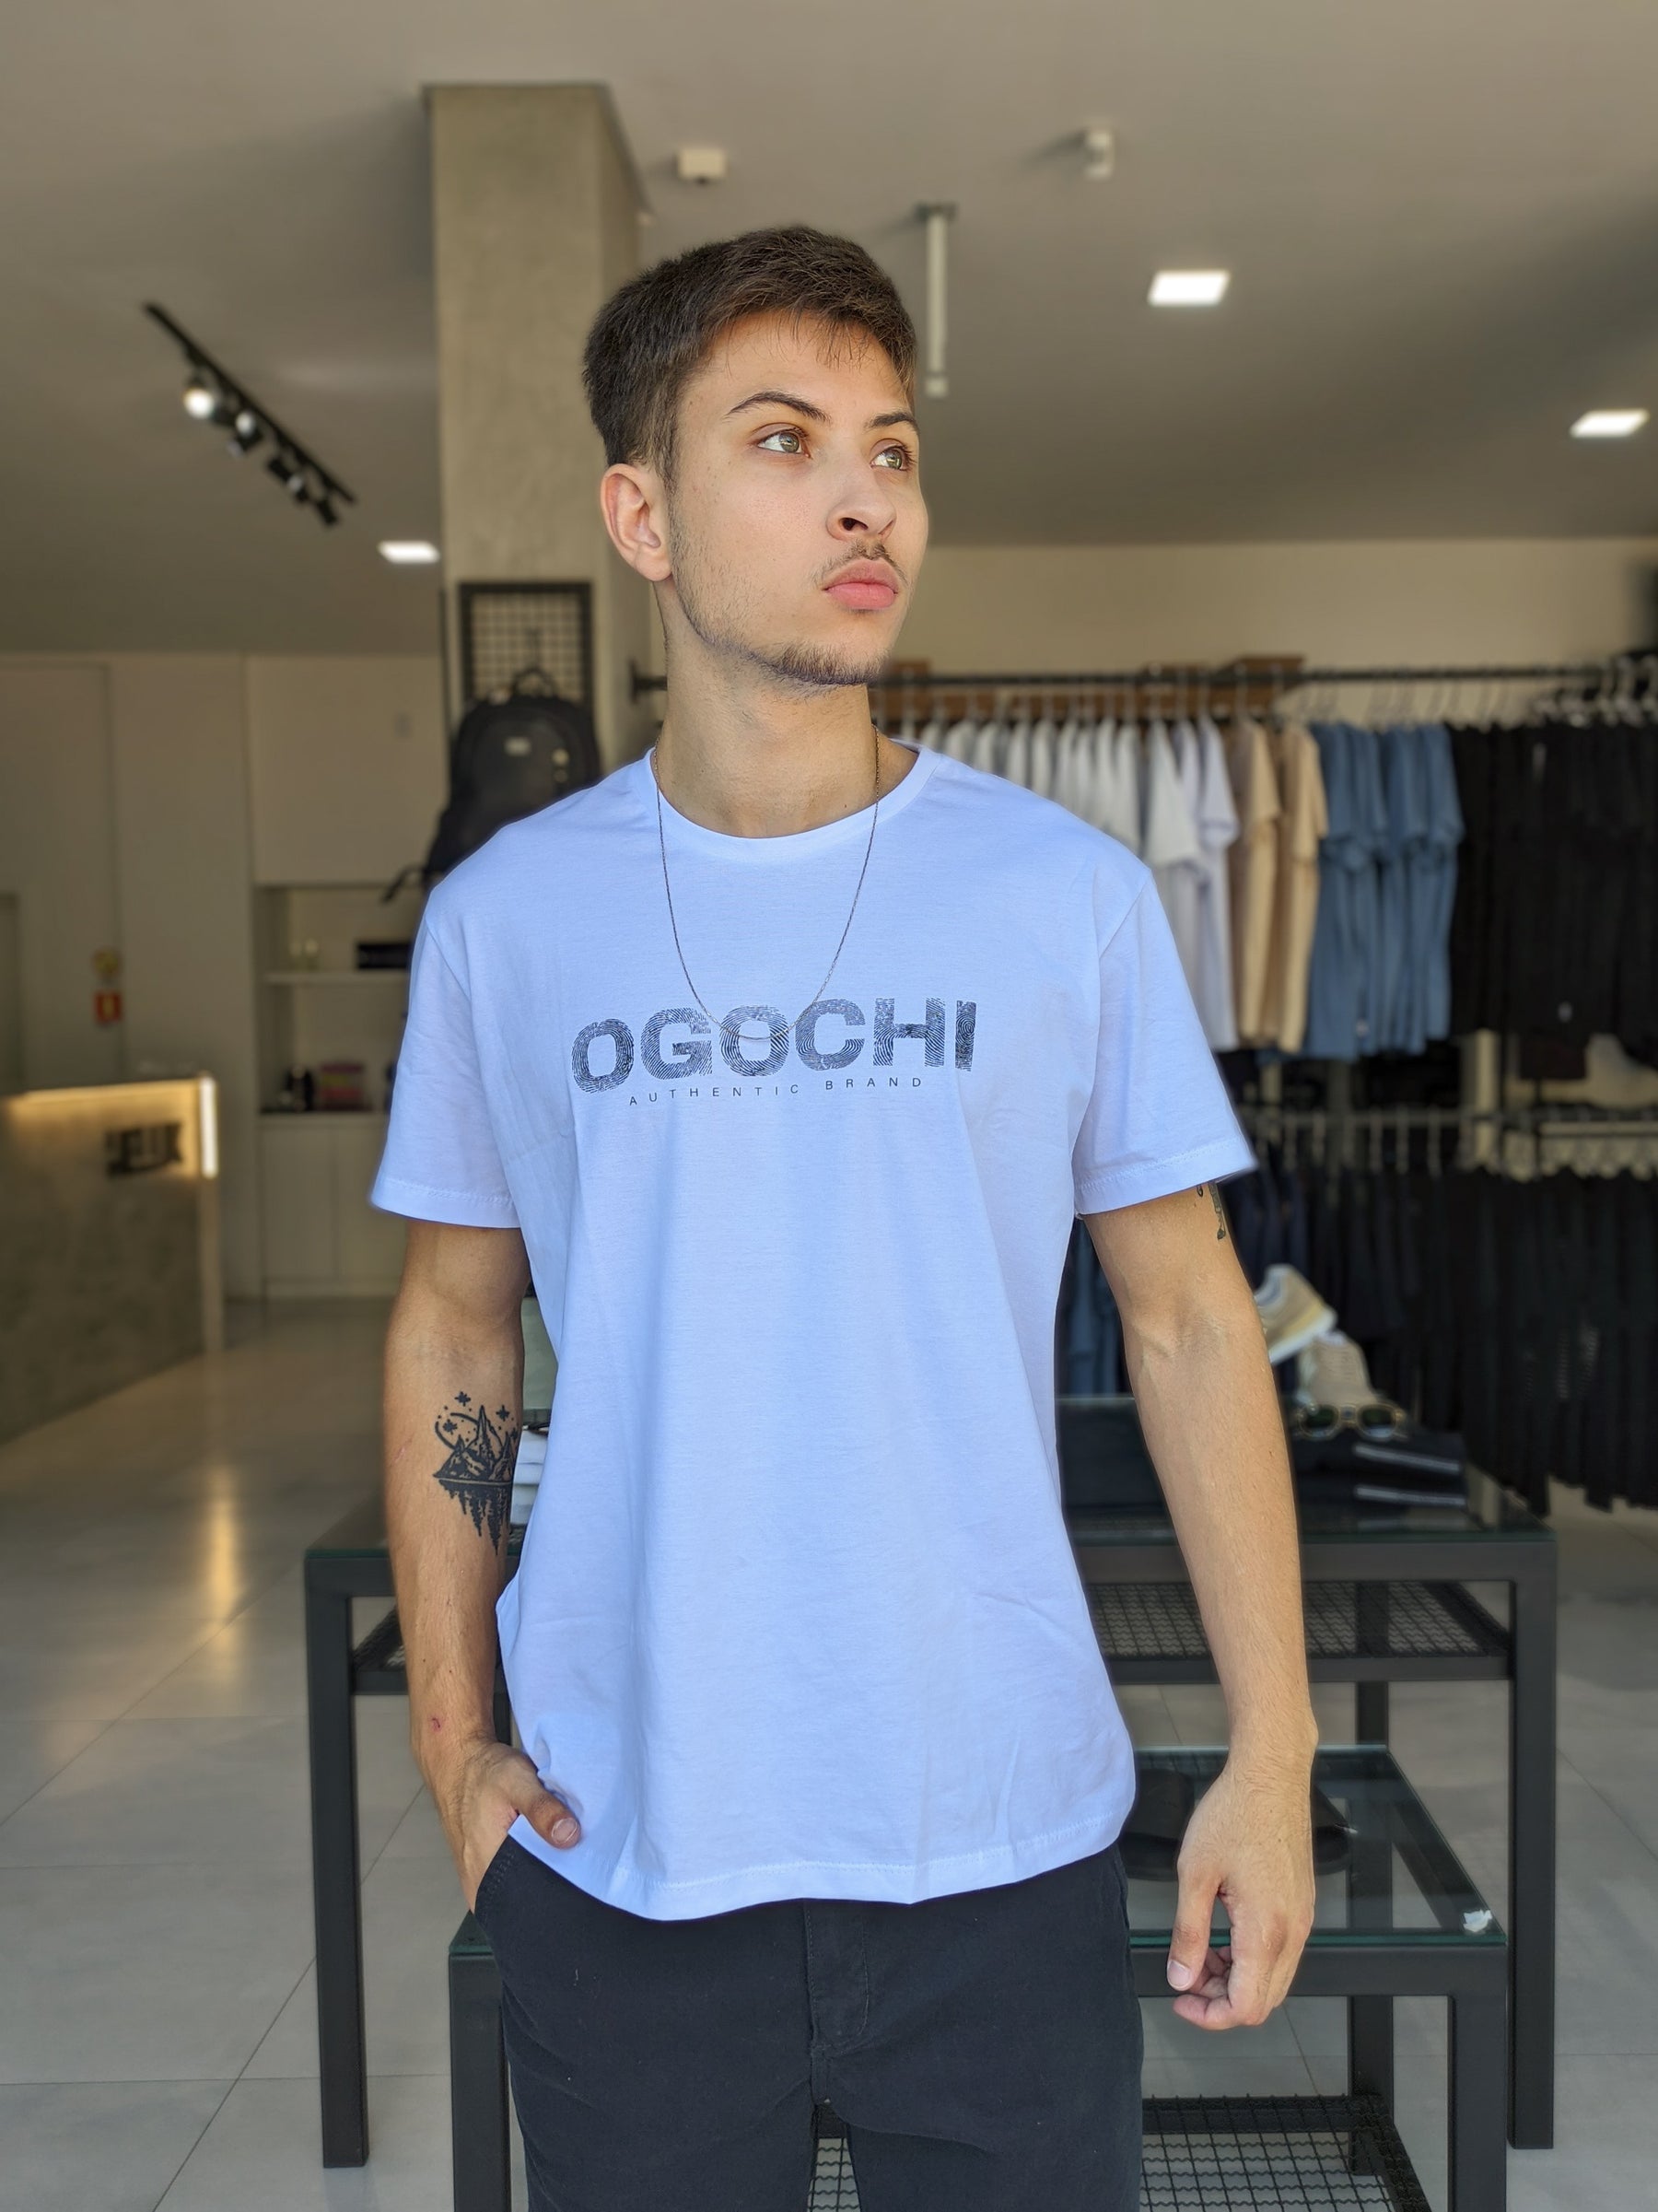 Camiseta Digital Ogochi - Hellik Store